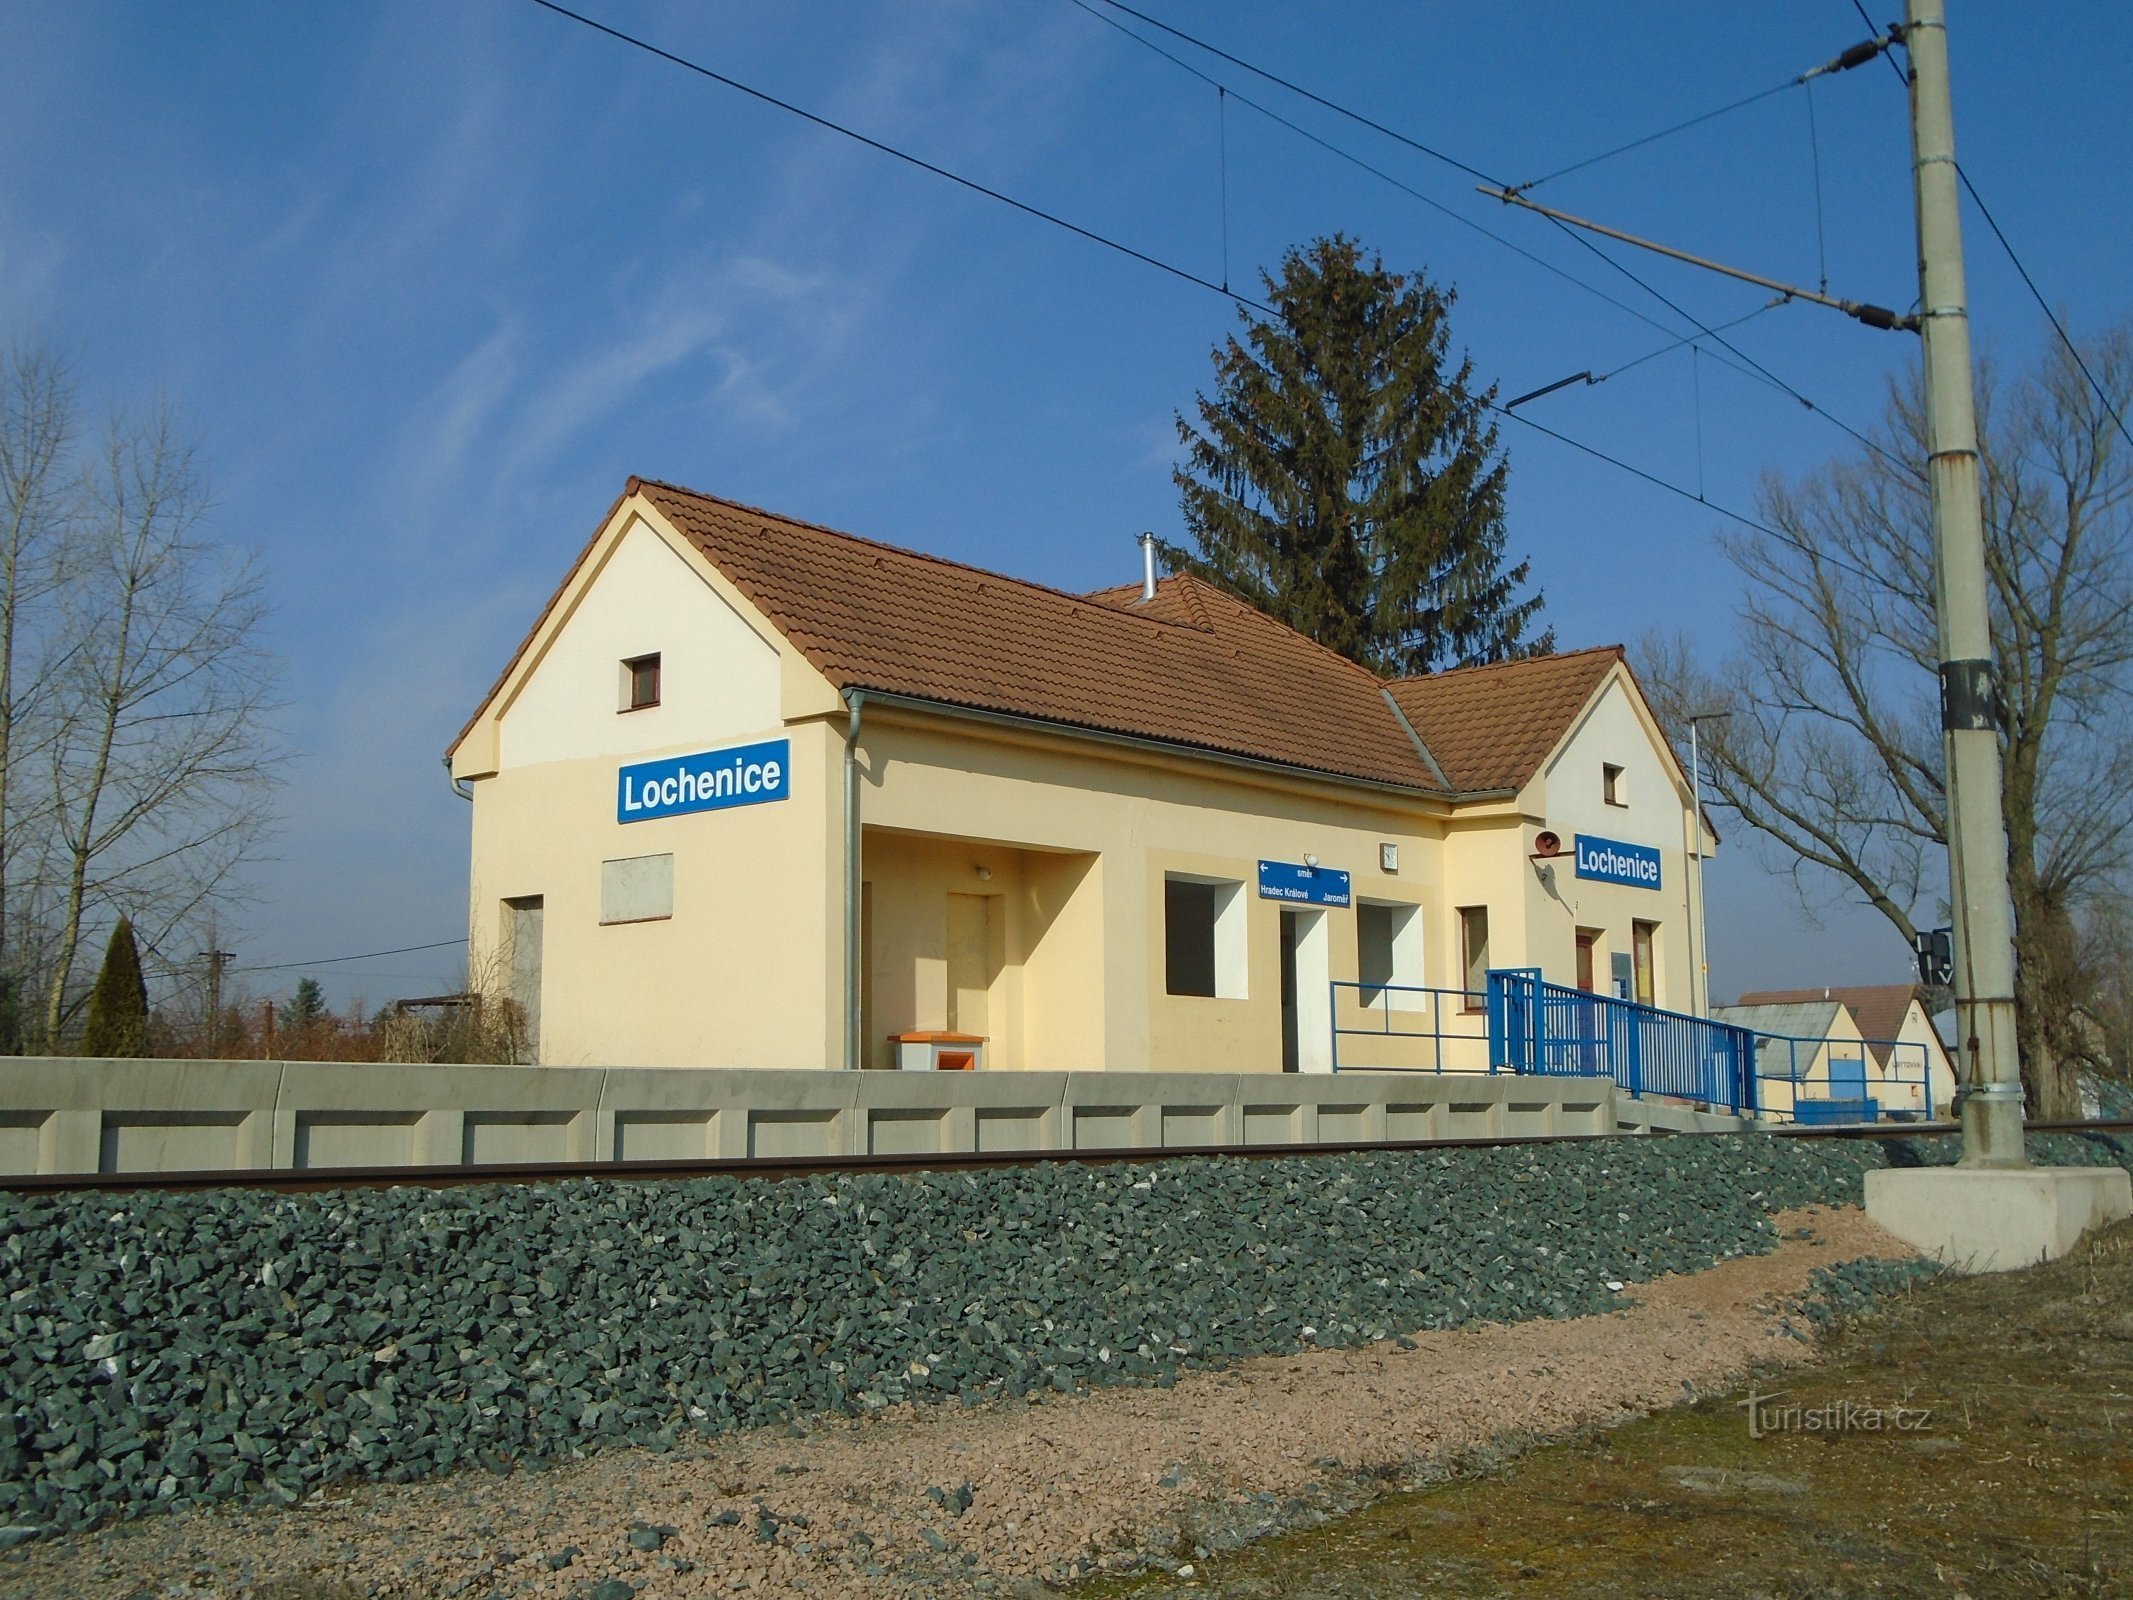 鉄道駅 (Lochenice)